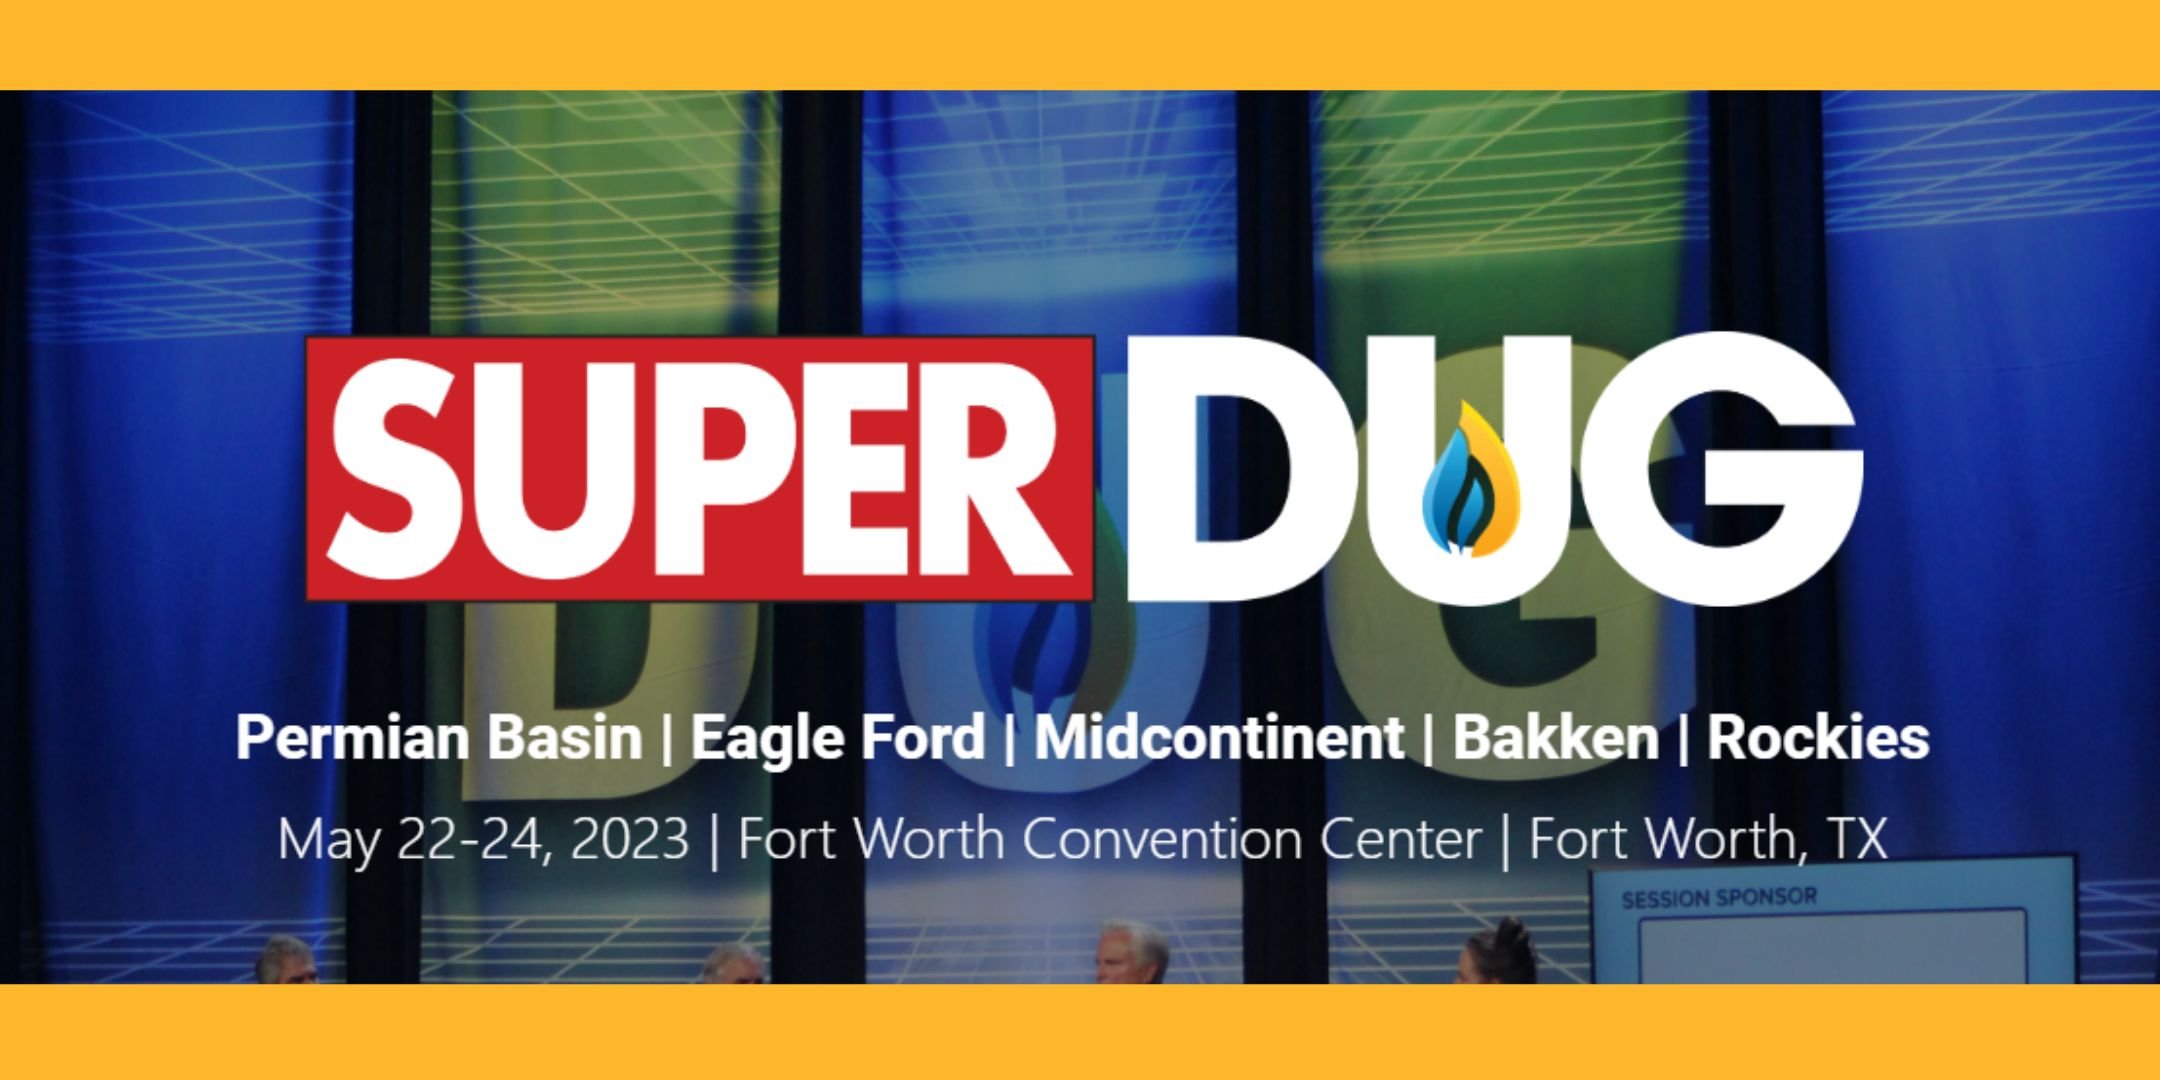 DUG - Worth , TX — EnQuest Energy Solutions